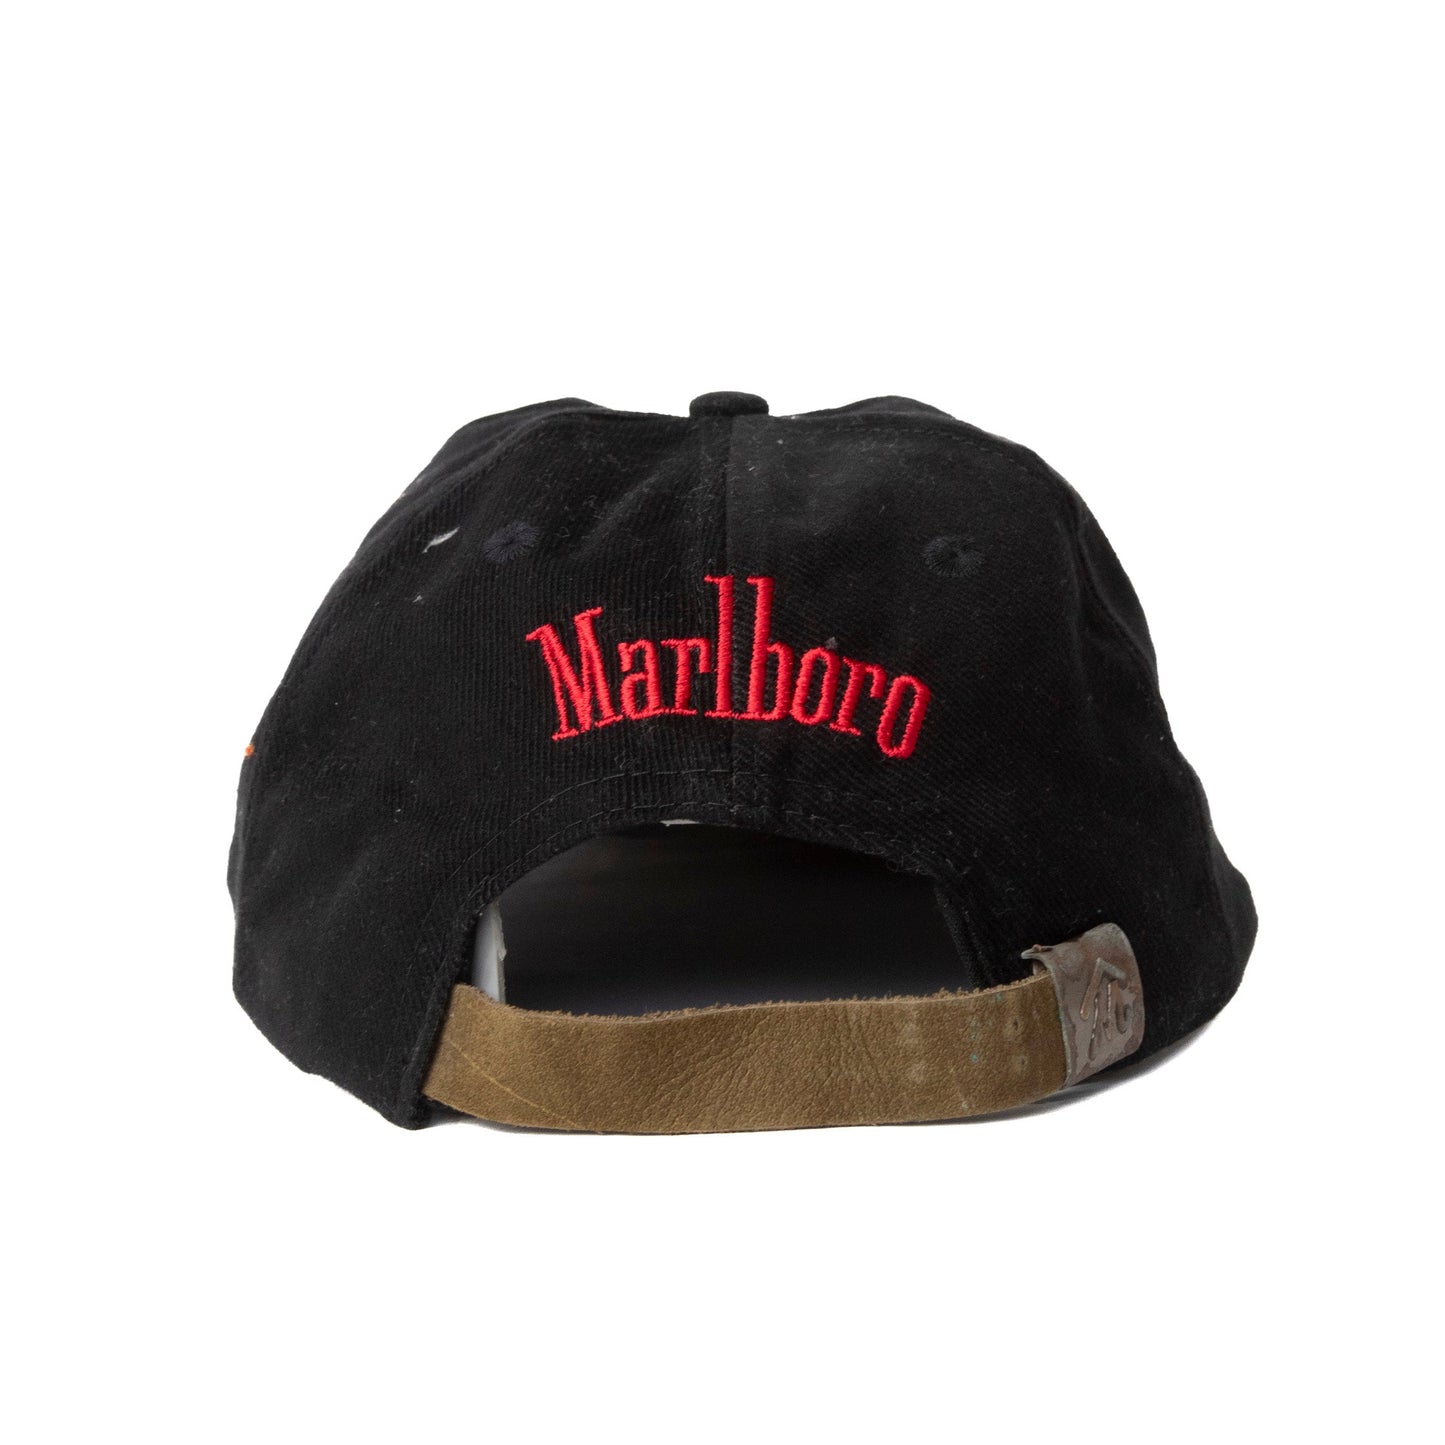 Marlboro Black Embroidered Cap